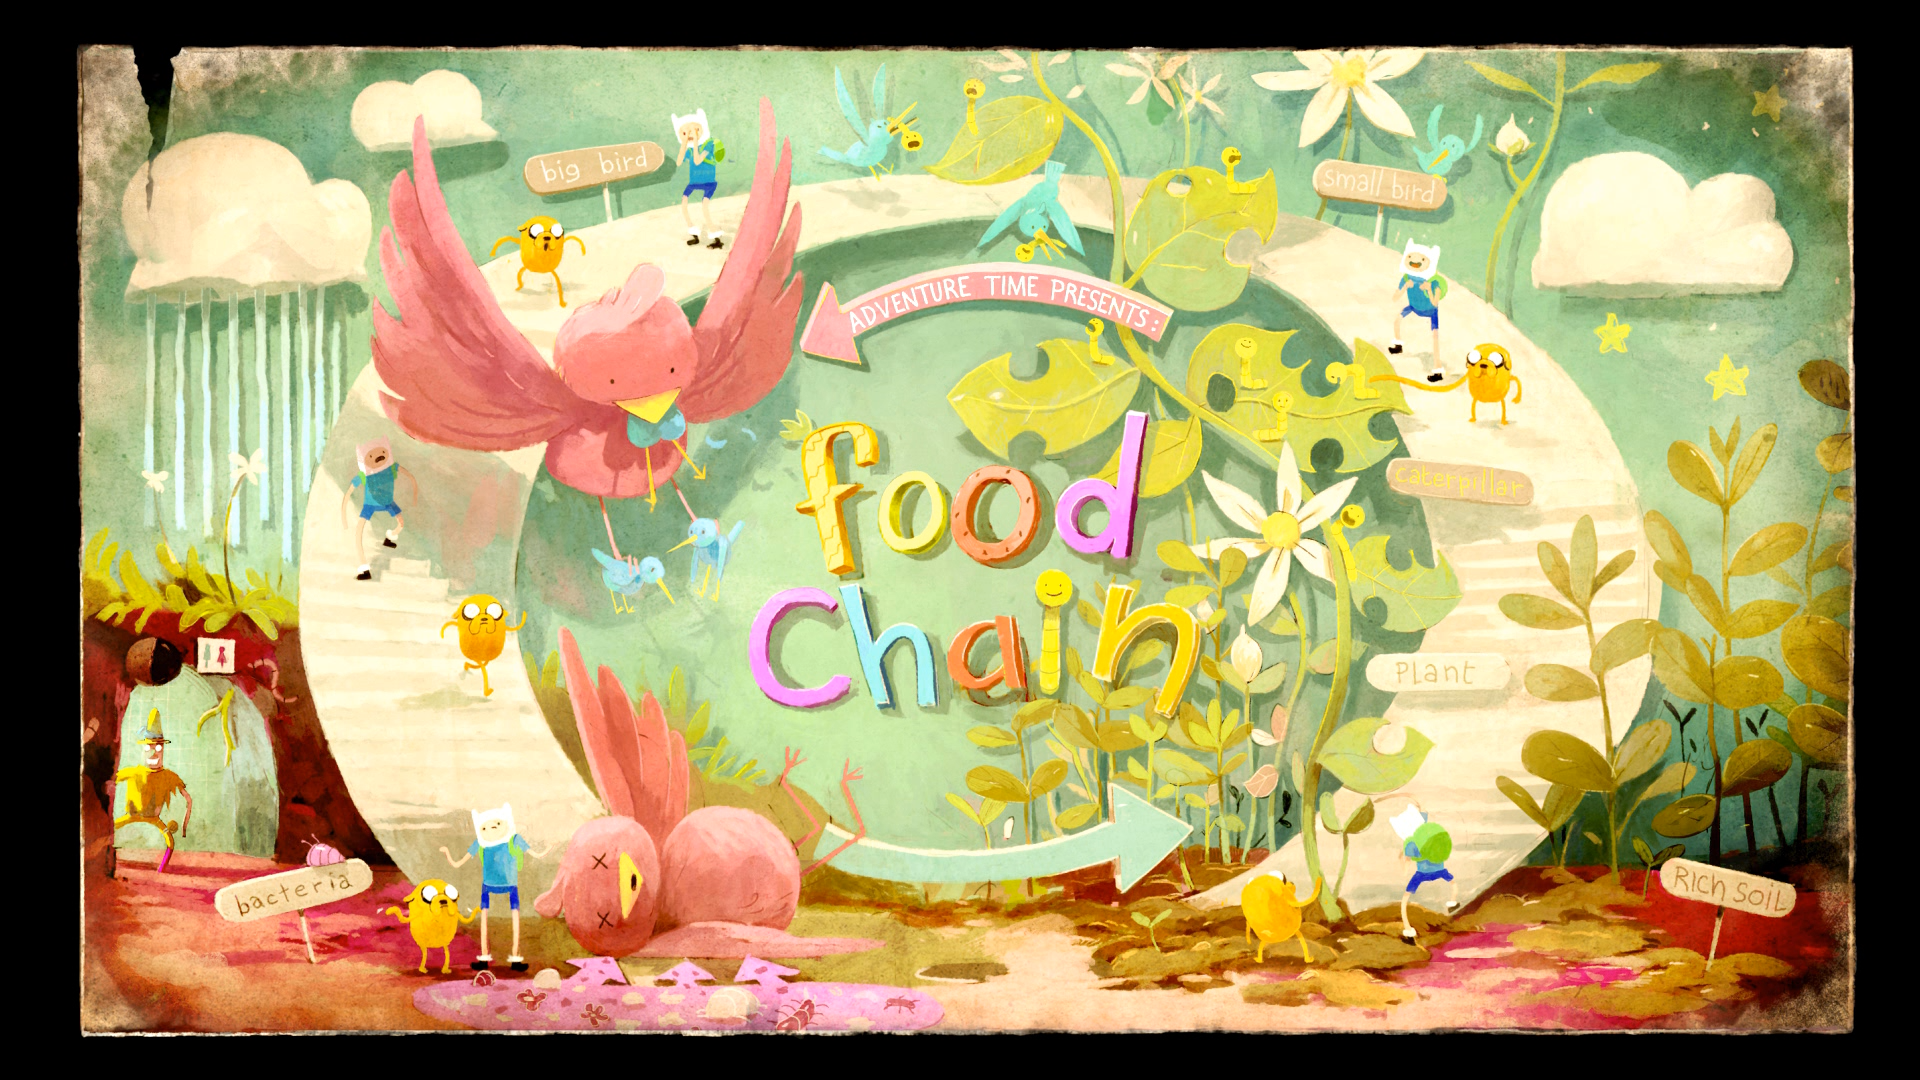 Food Chain Adventure Time Wiki Fandom